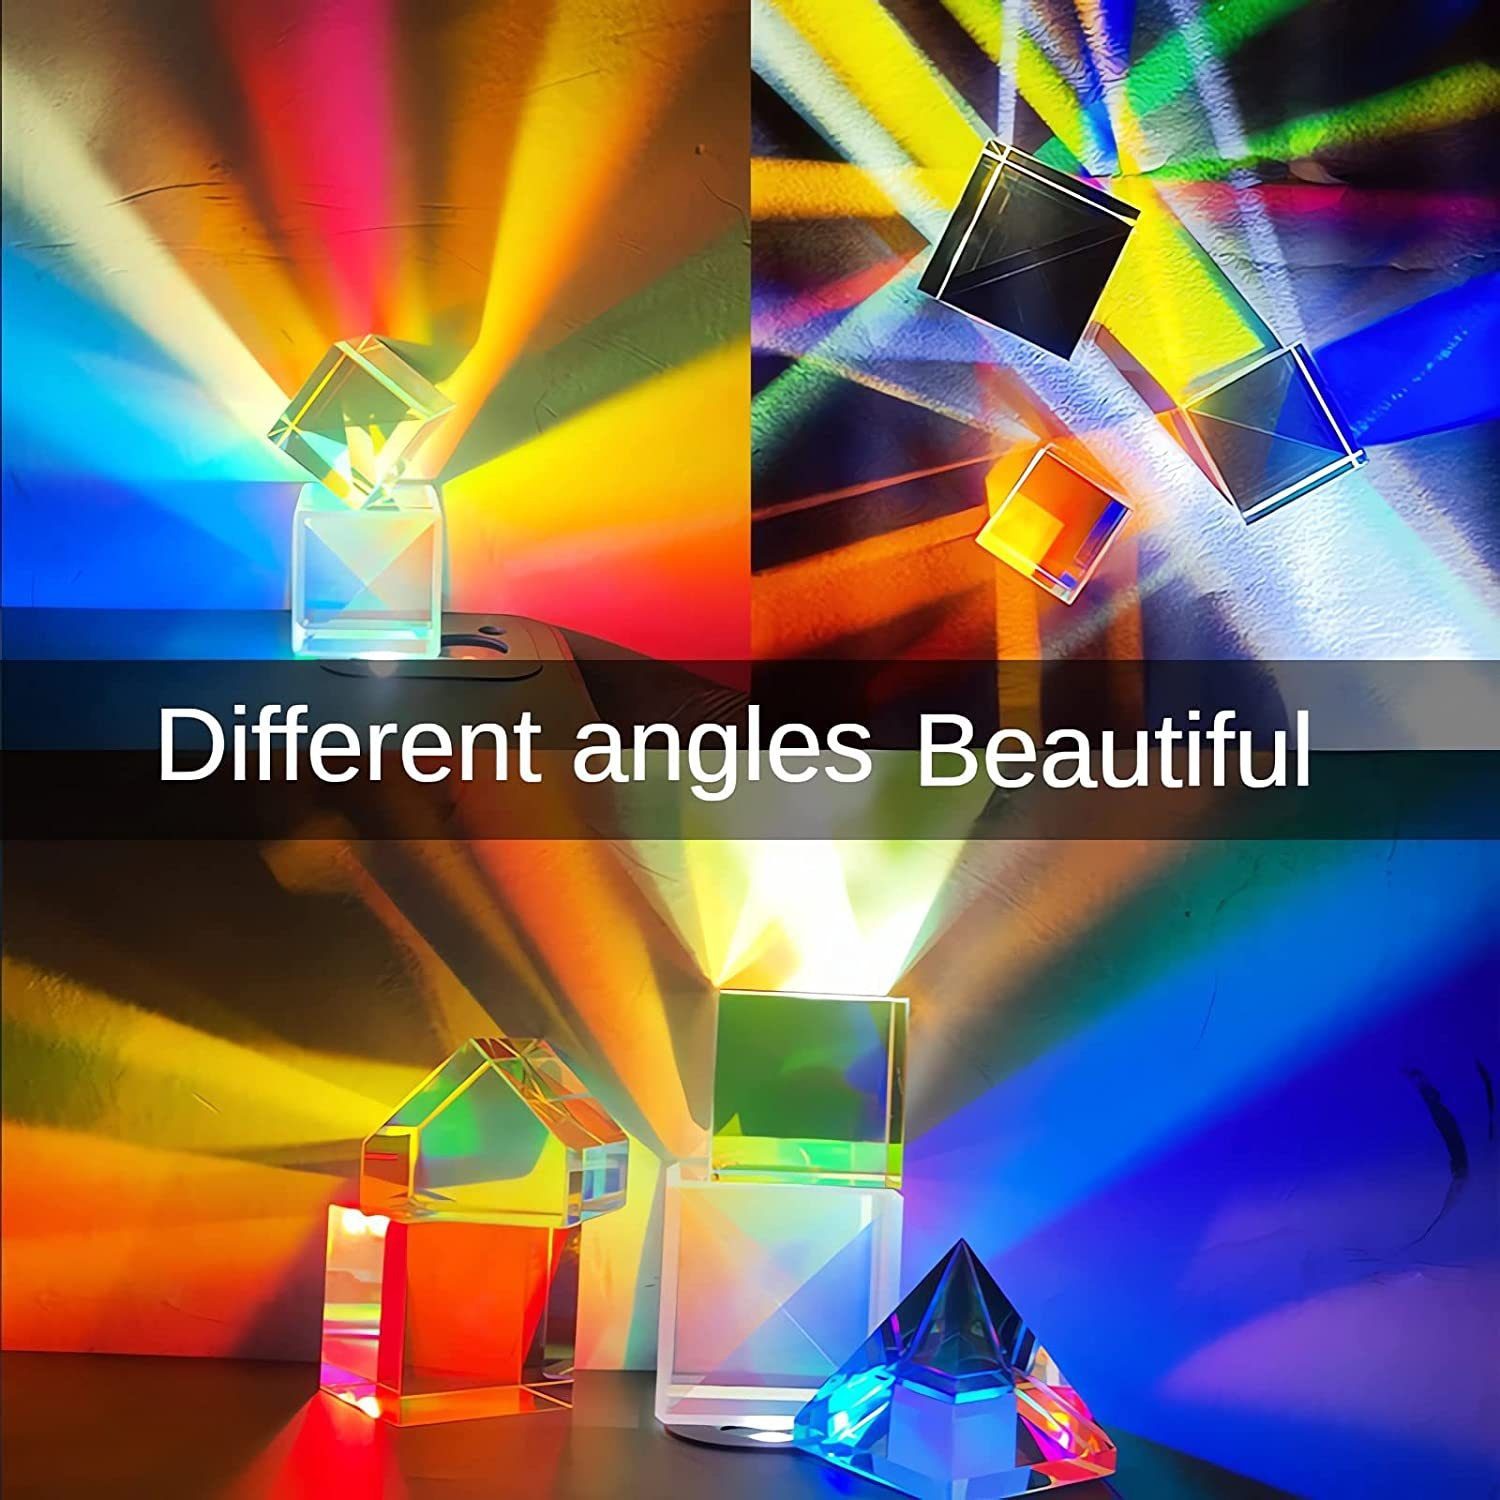 Dekoobjekt dreidimensionaler Zauberwürfel Regenbogenfarbener Inshow Prismenwürfel,